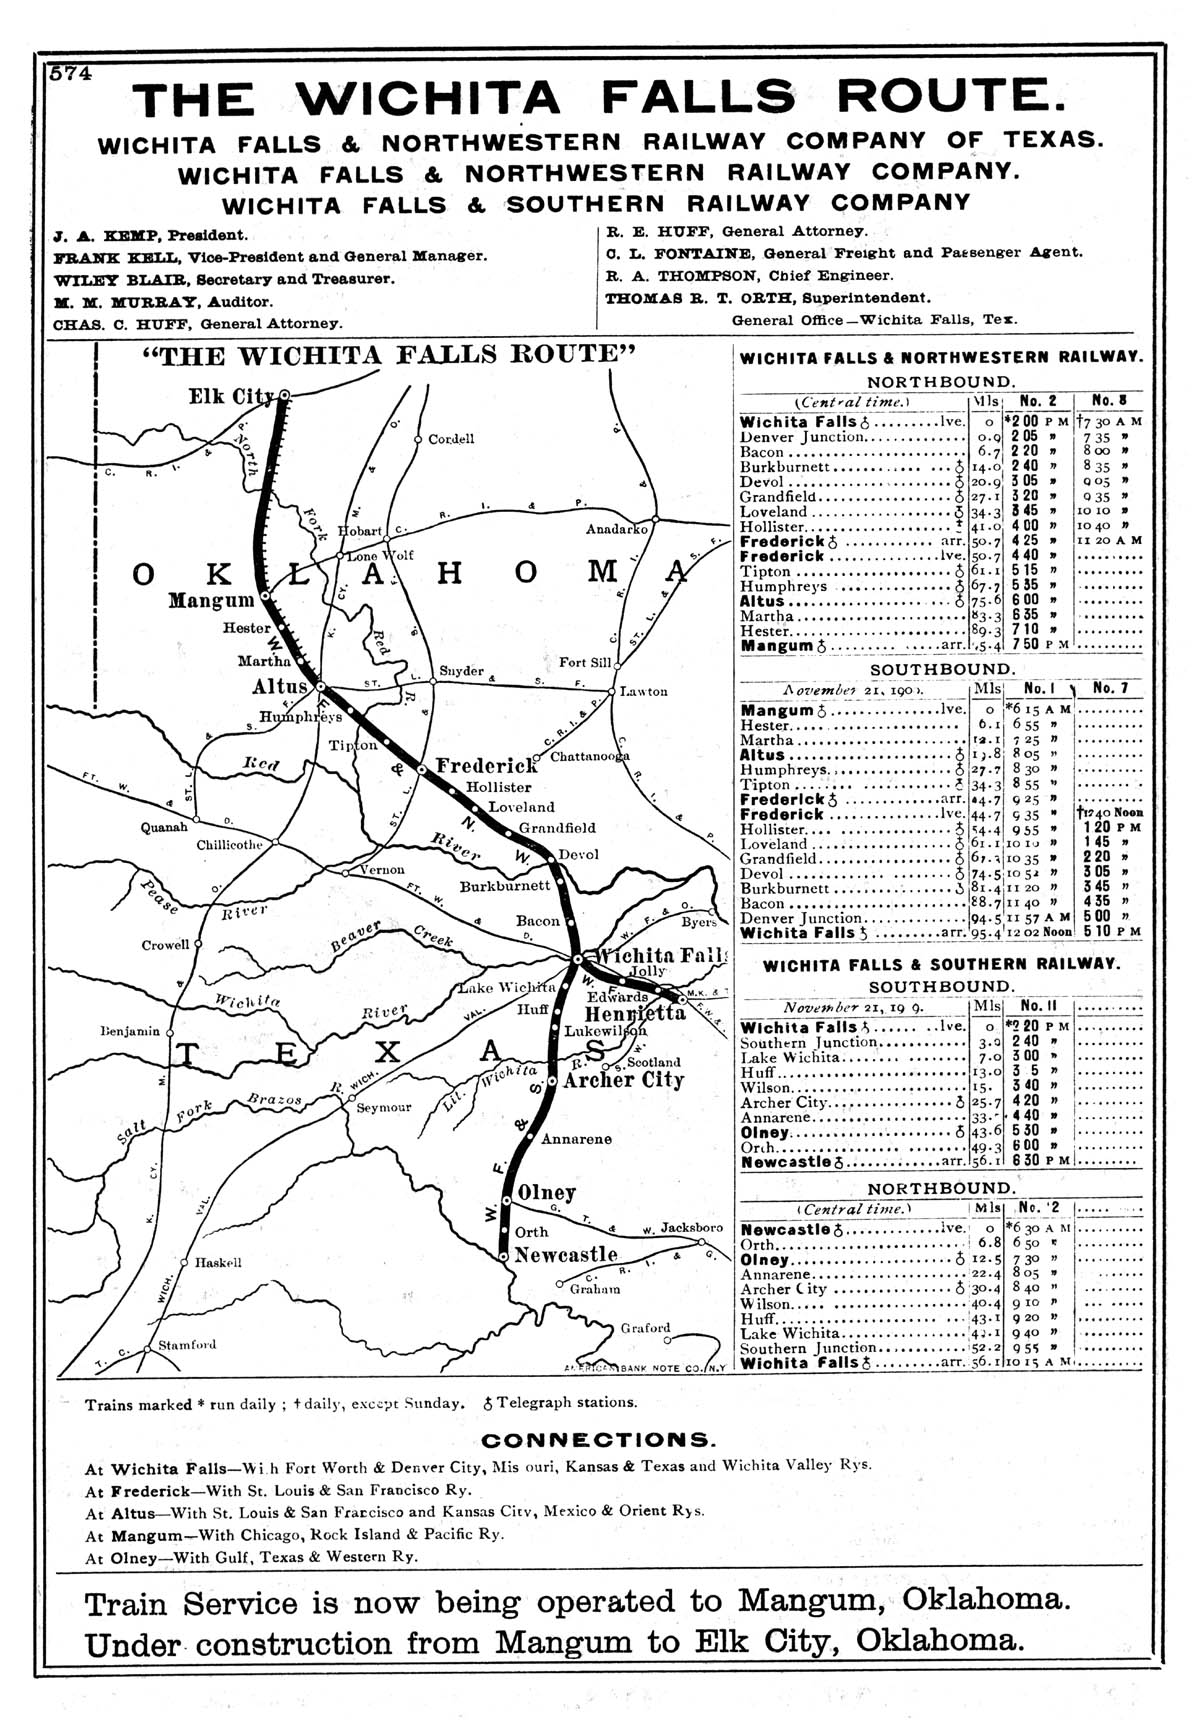 Wichita Falls & Northwestern Railway Company (Tex.), Map Showing Route in 1910.